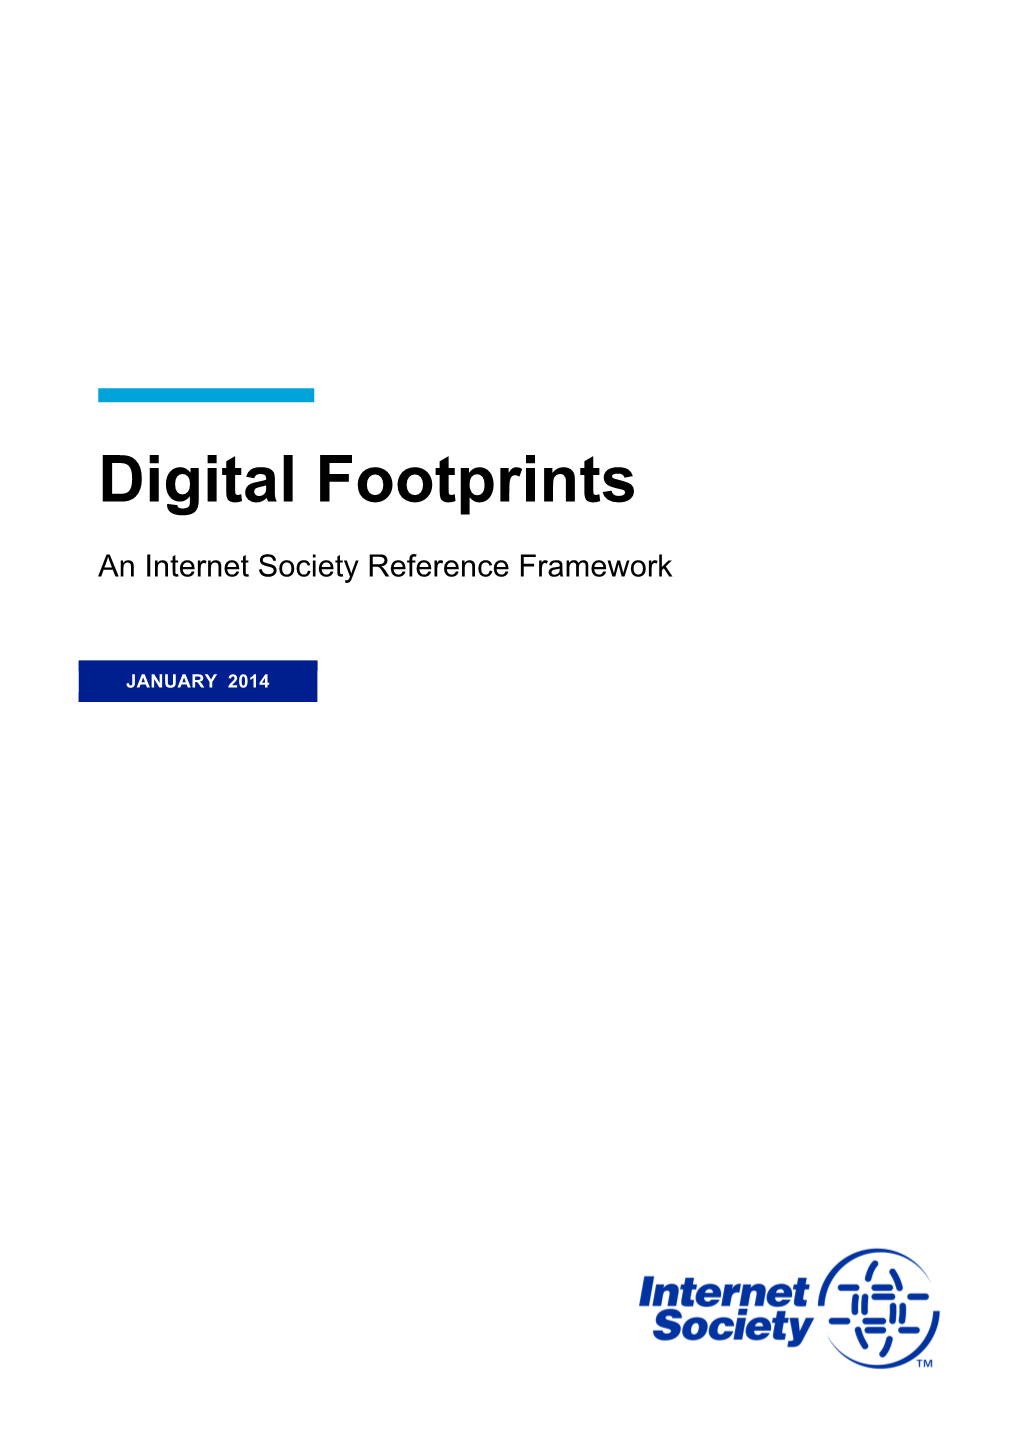 Digital Footprints an Internet Society Reference Framework